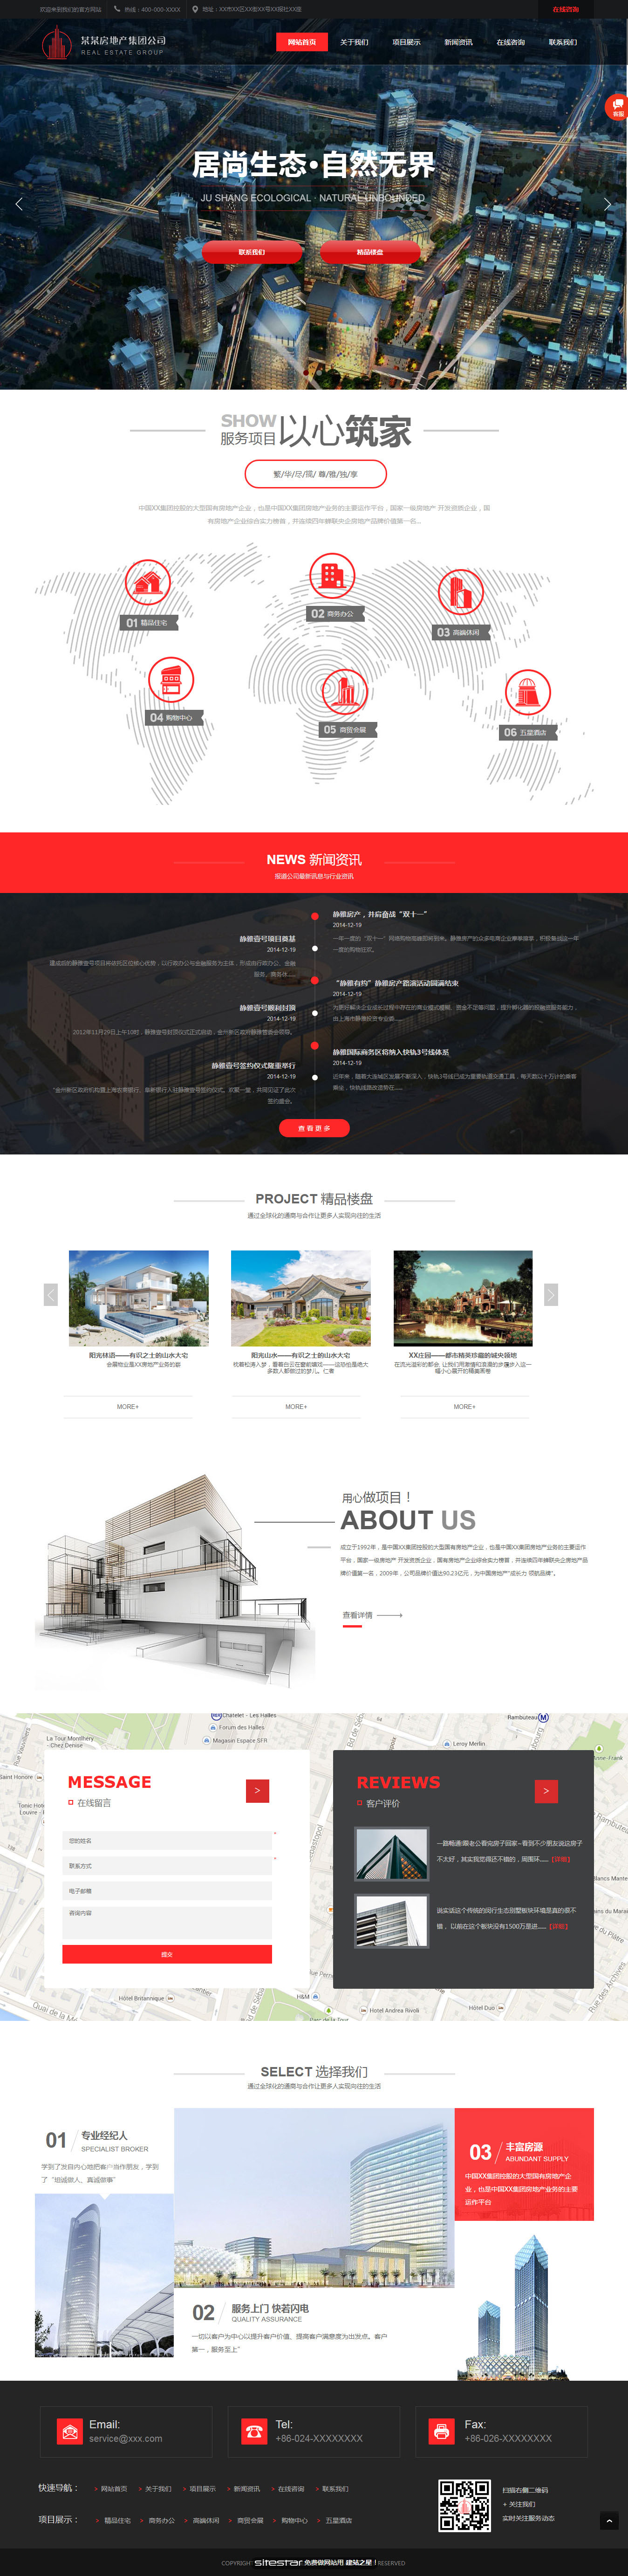 企业网站精美模板-real-estate-551